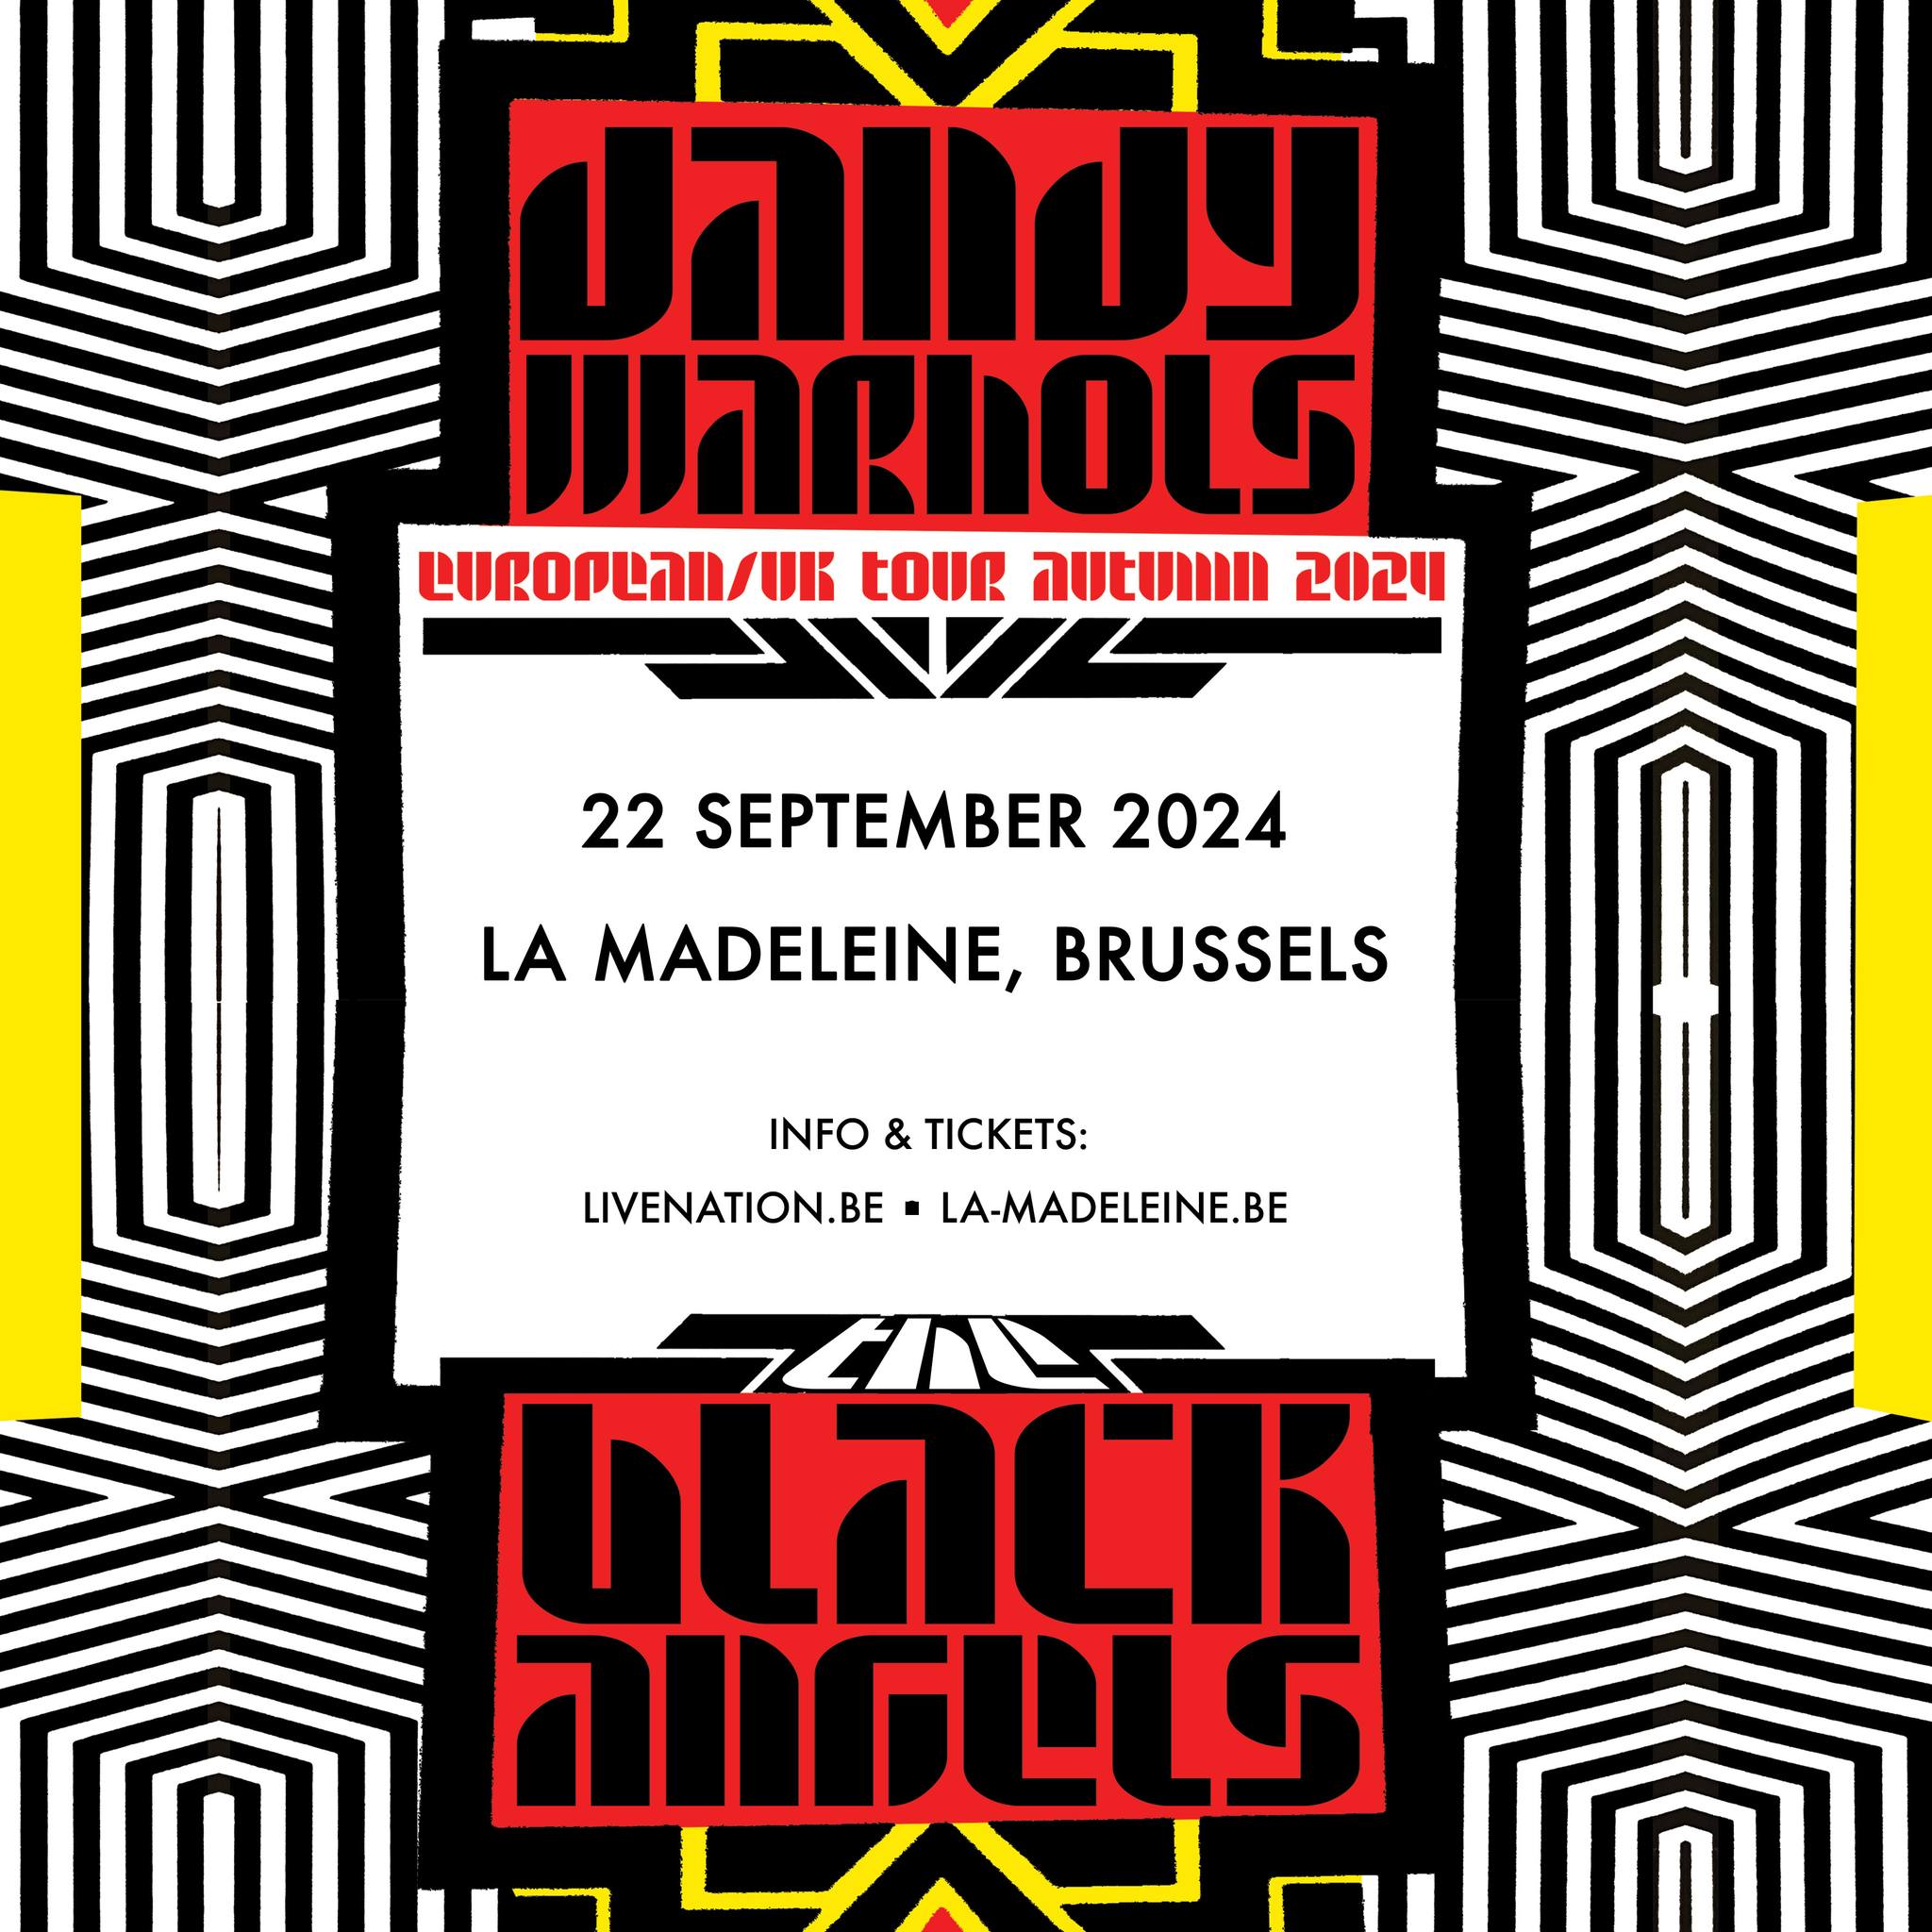 The Dandy Warhols - The Black Keys al La Madeleine Tickets